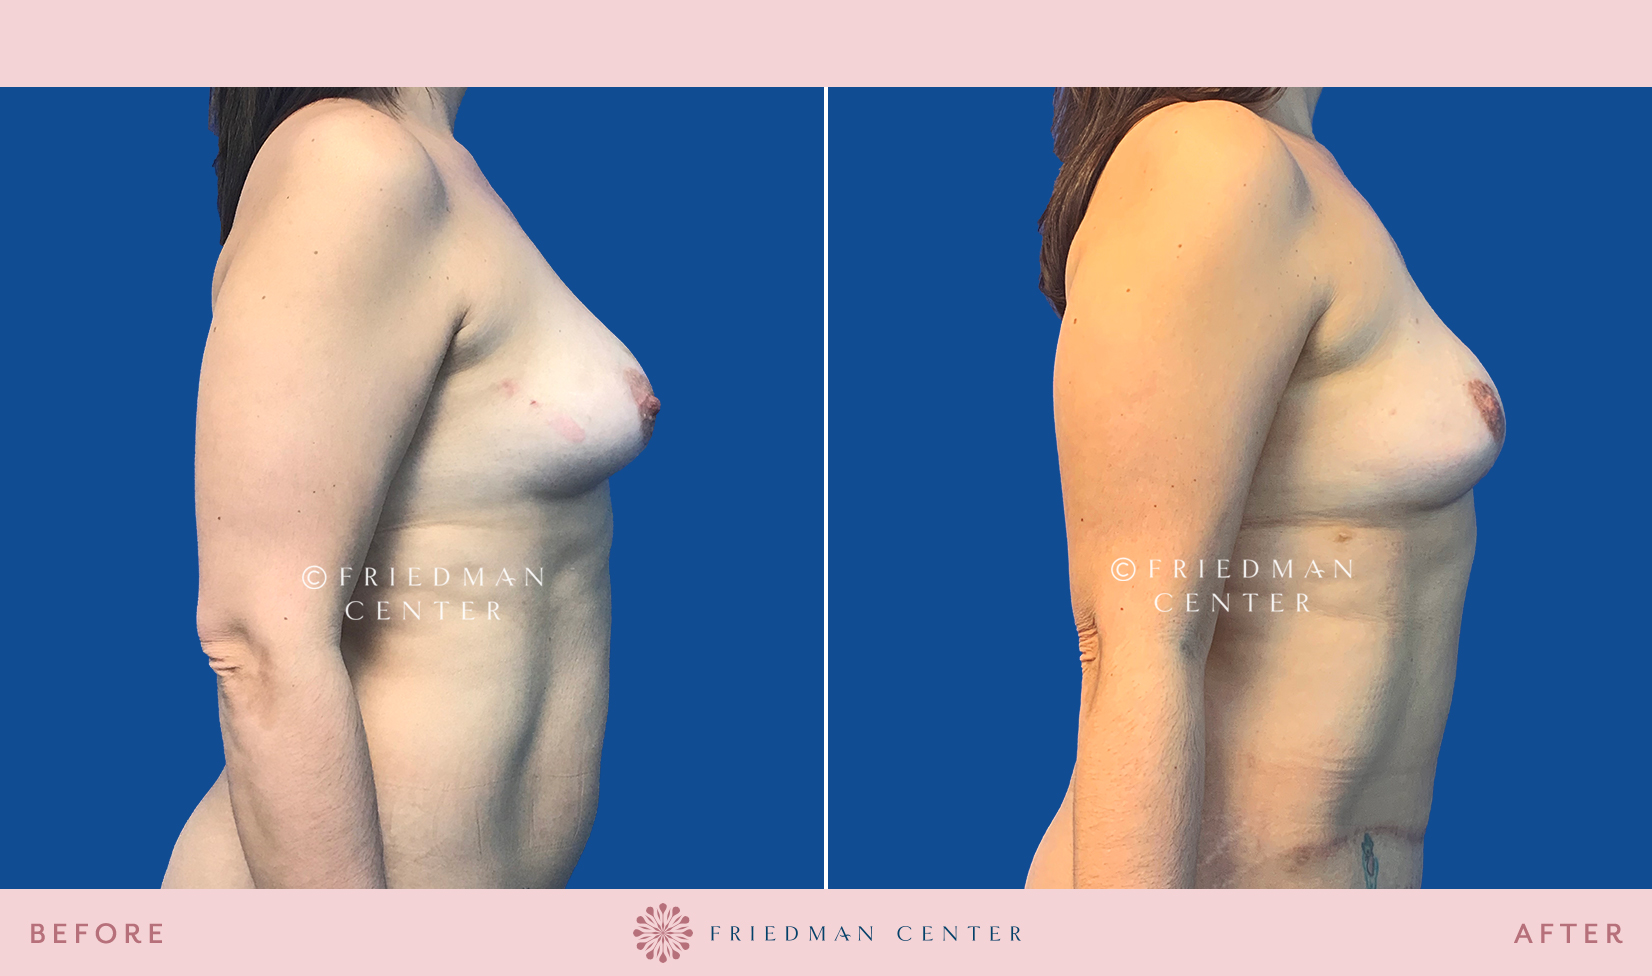 Nipple-Sparing Double Mastectomy - Friedman Center